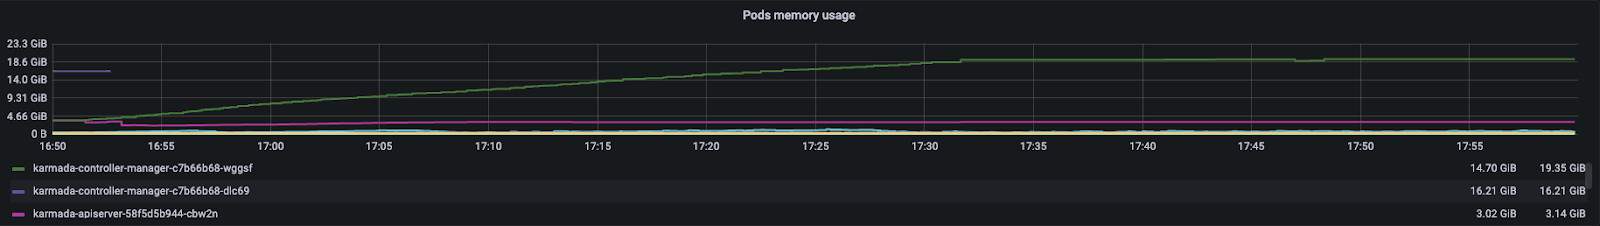 Diagram showing Pods memory usage result